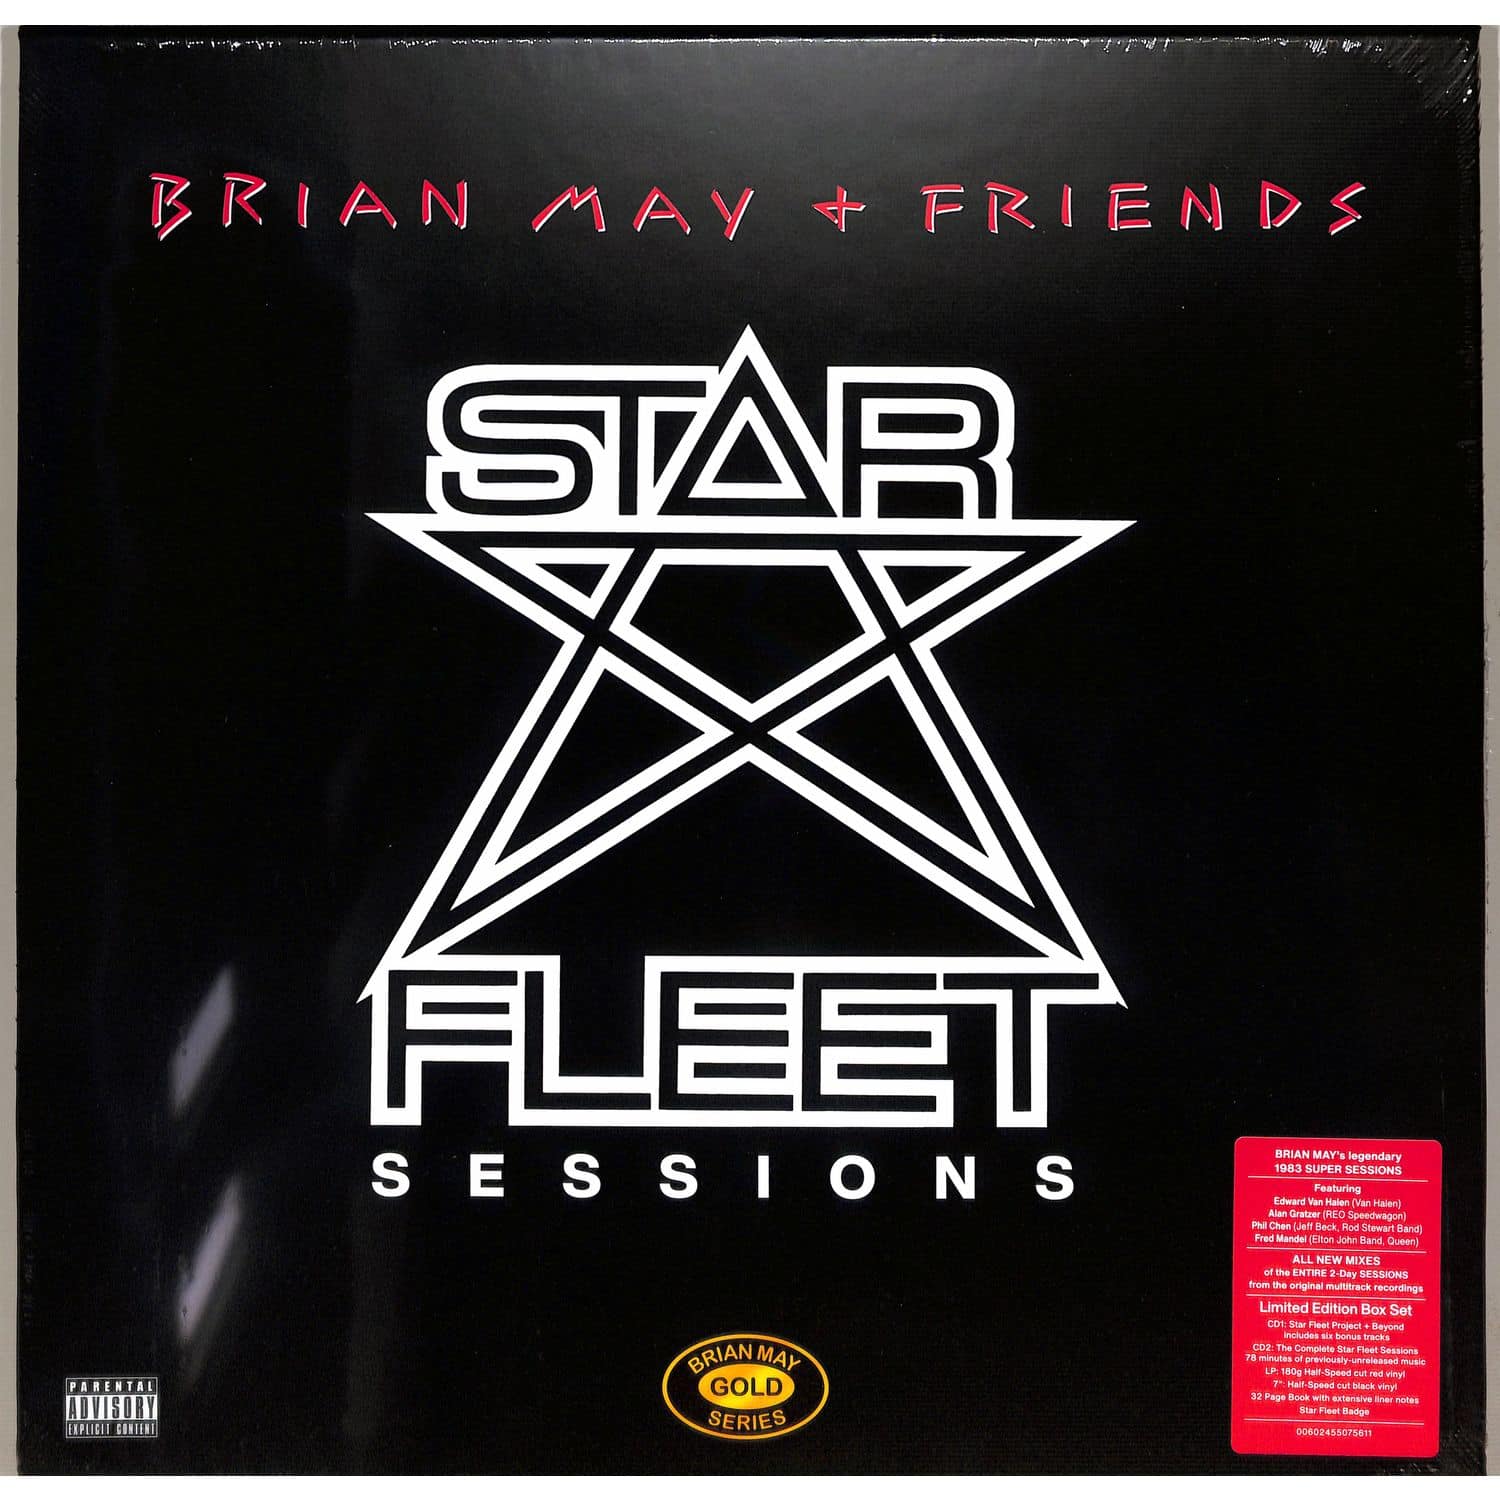 Brian May - STAR FLEET PROJECT 